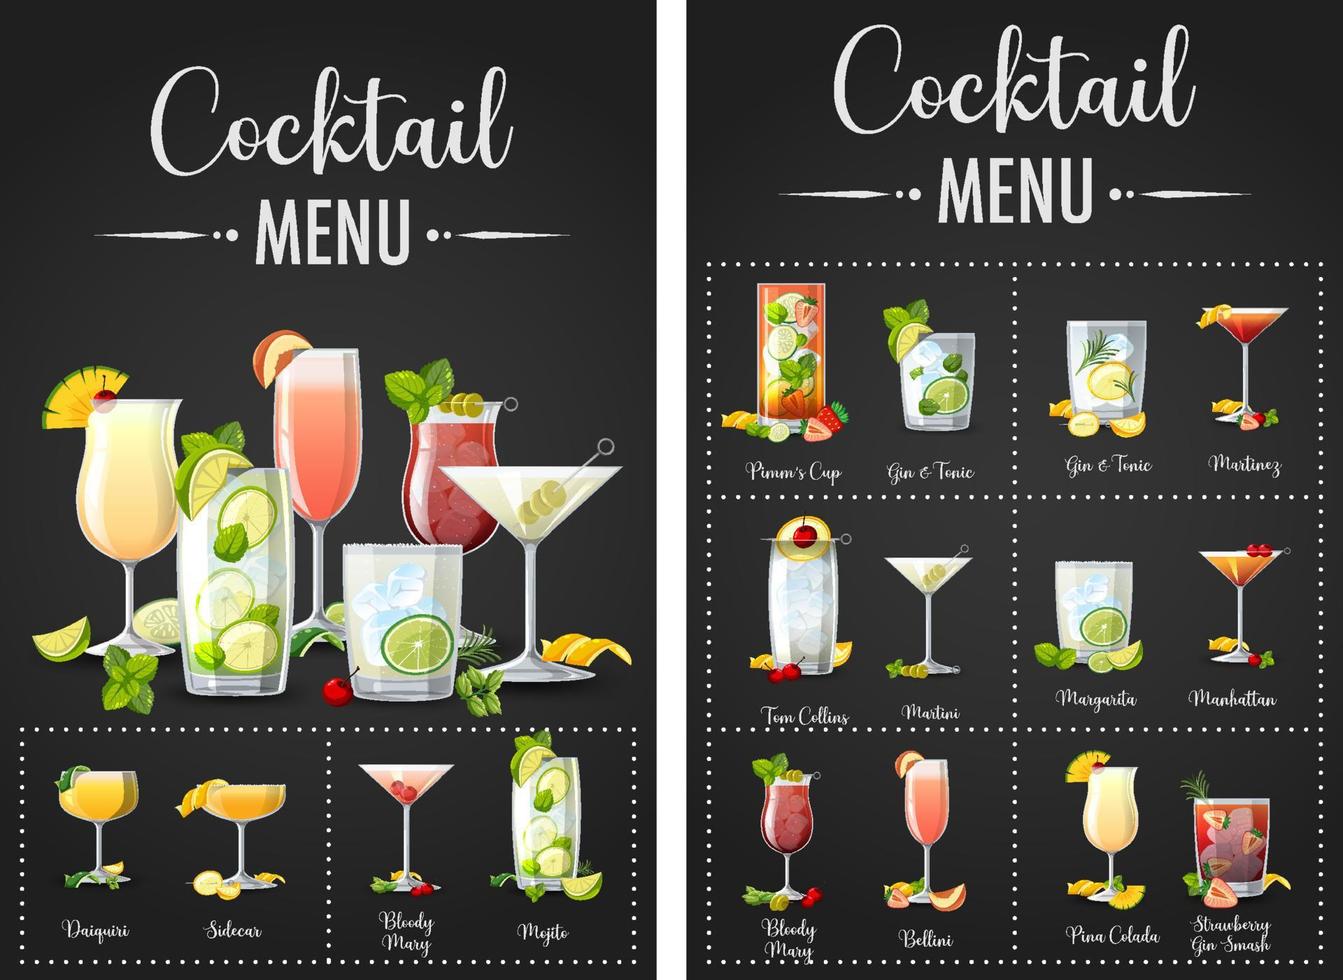 A printed menu of cocktails vector